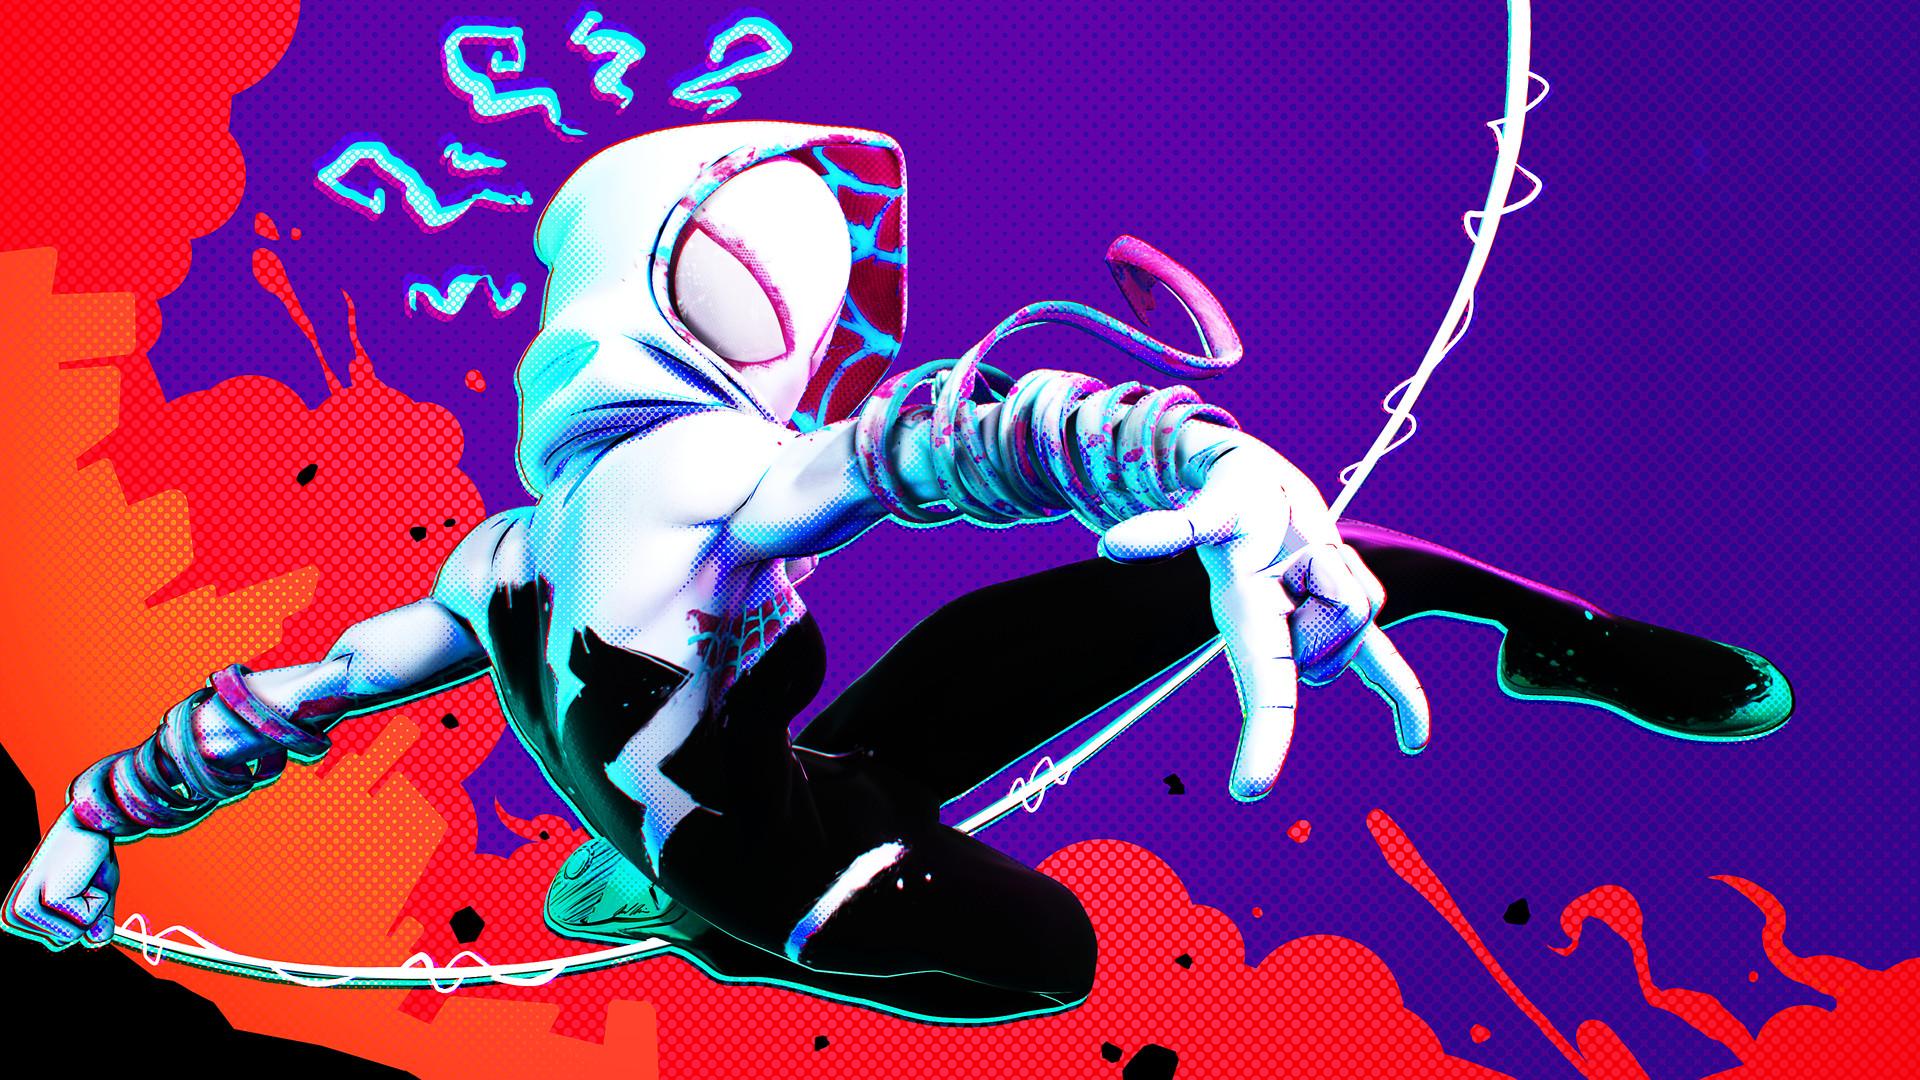 Spider Gwen Art, HD Superheroes, 4k Wallpaper, Image, Background